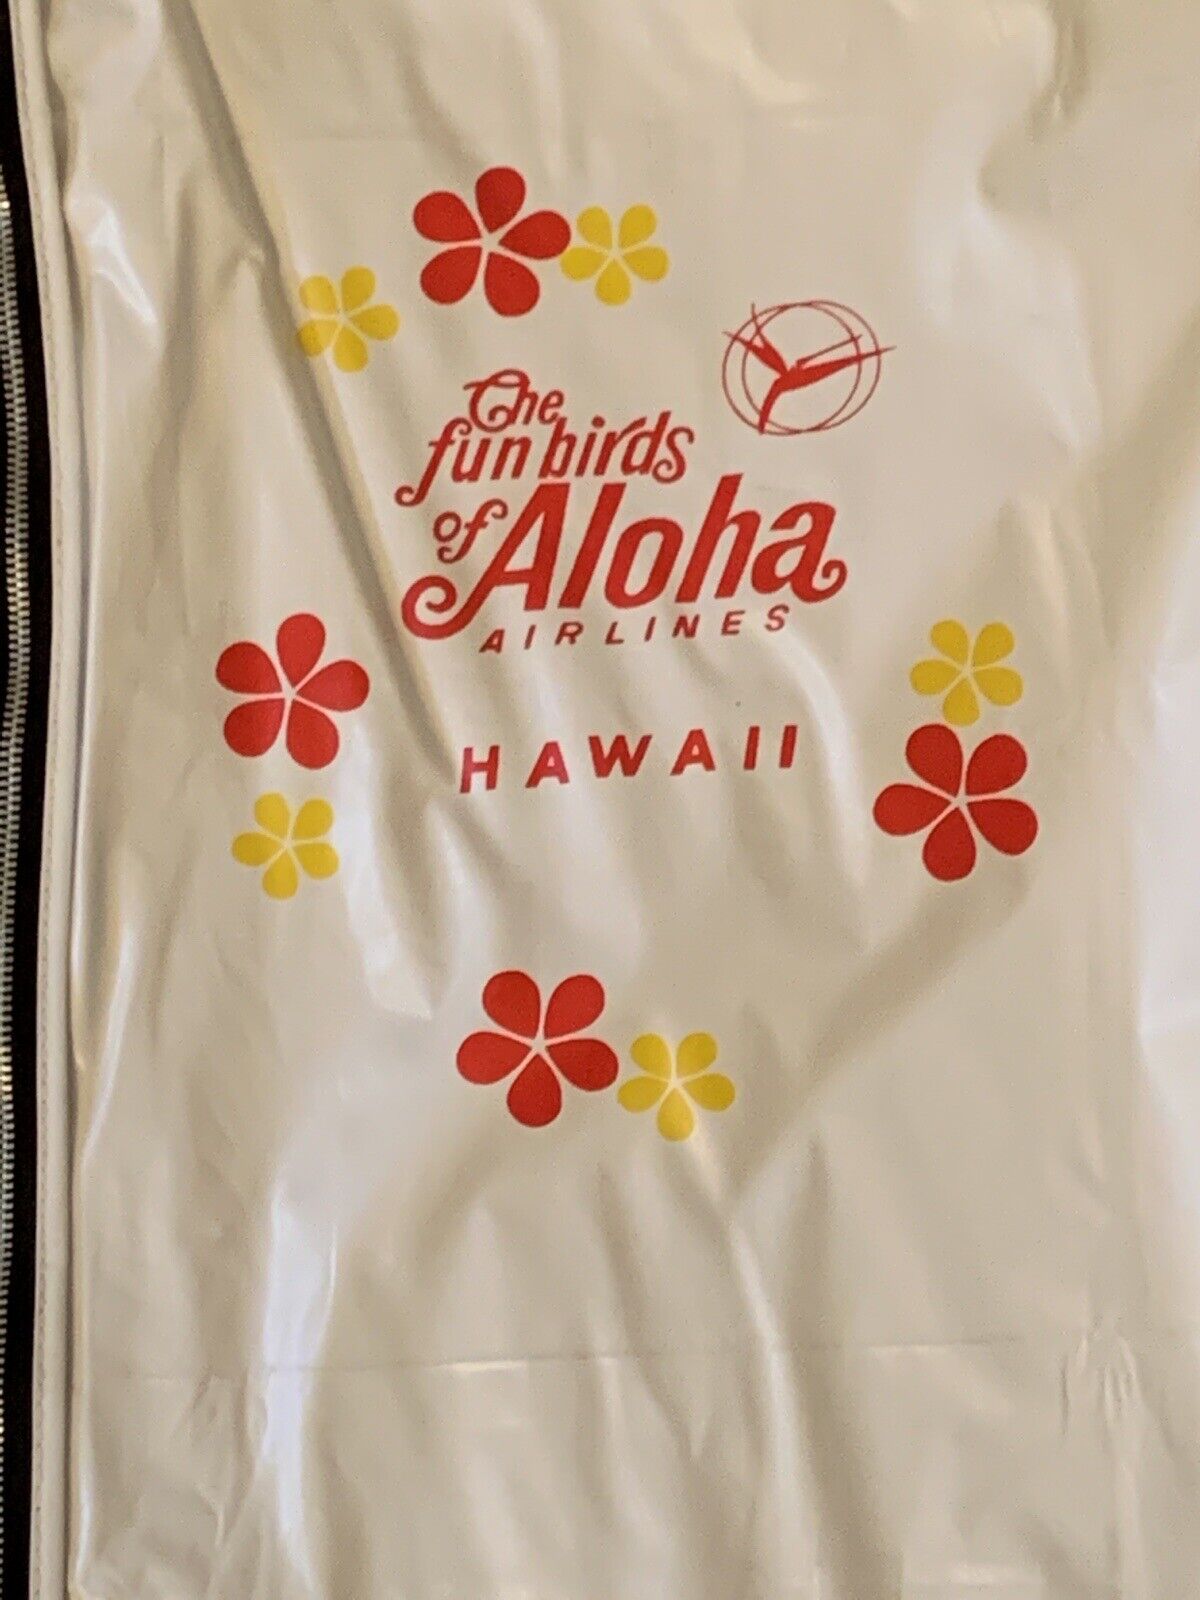 Aloha Airlines FUN BIRDS Garment Bag - Mid 1980’s